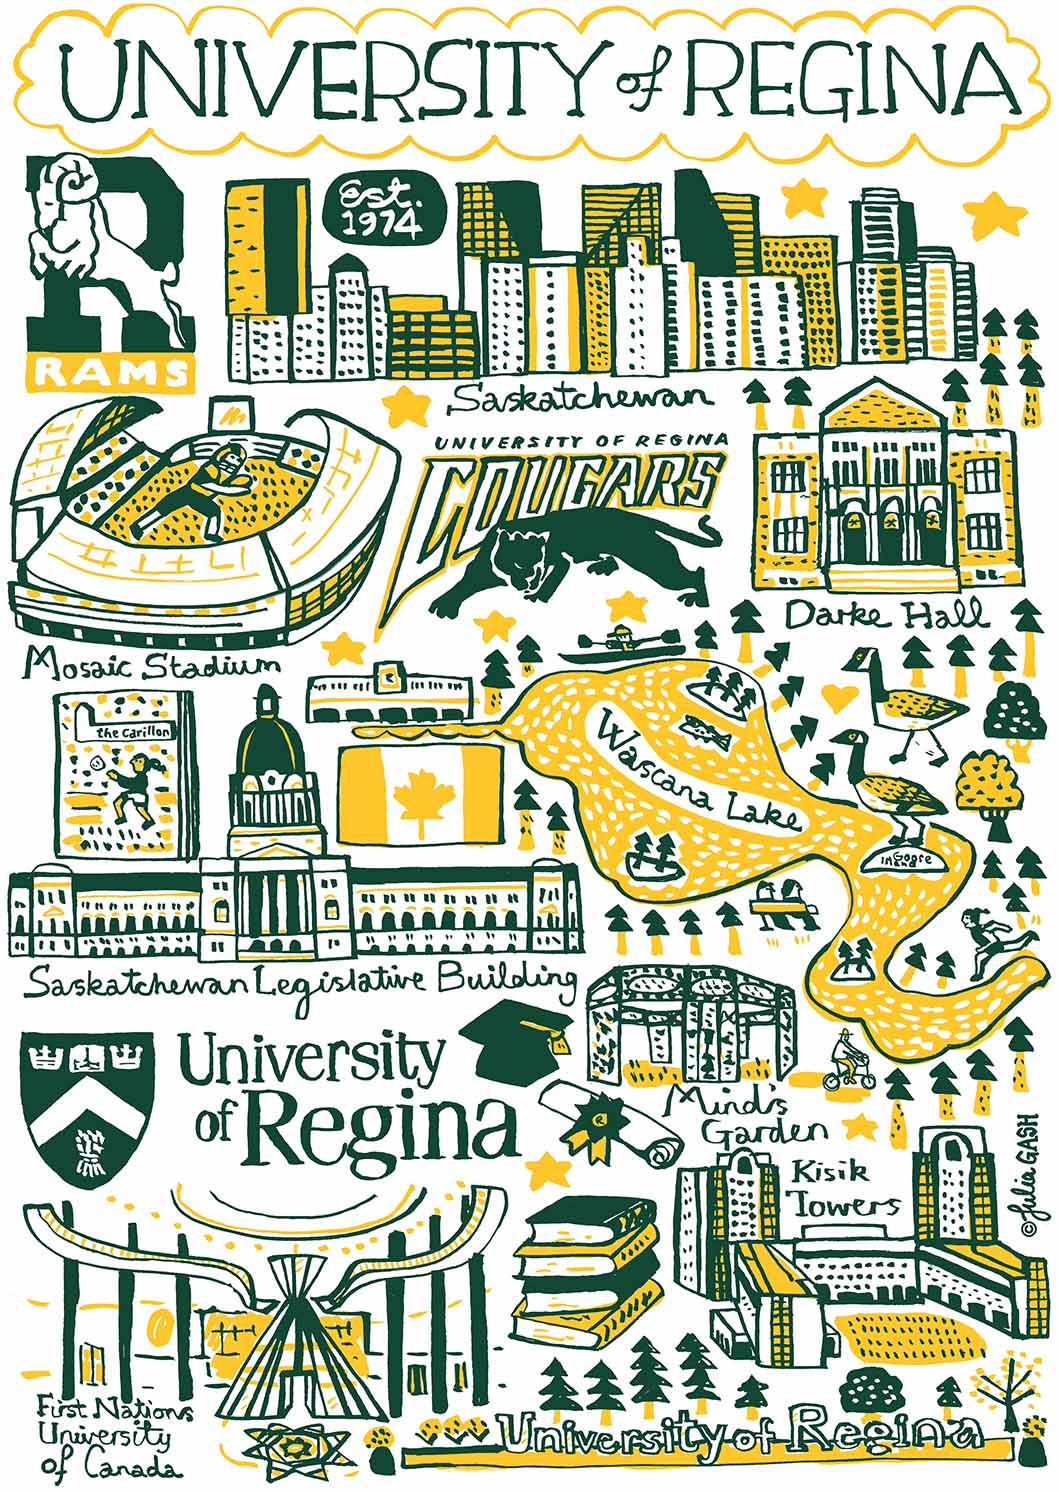 University of Regina Design by Julia Gash